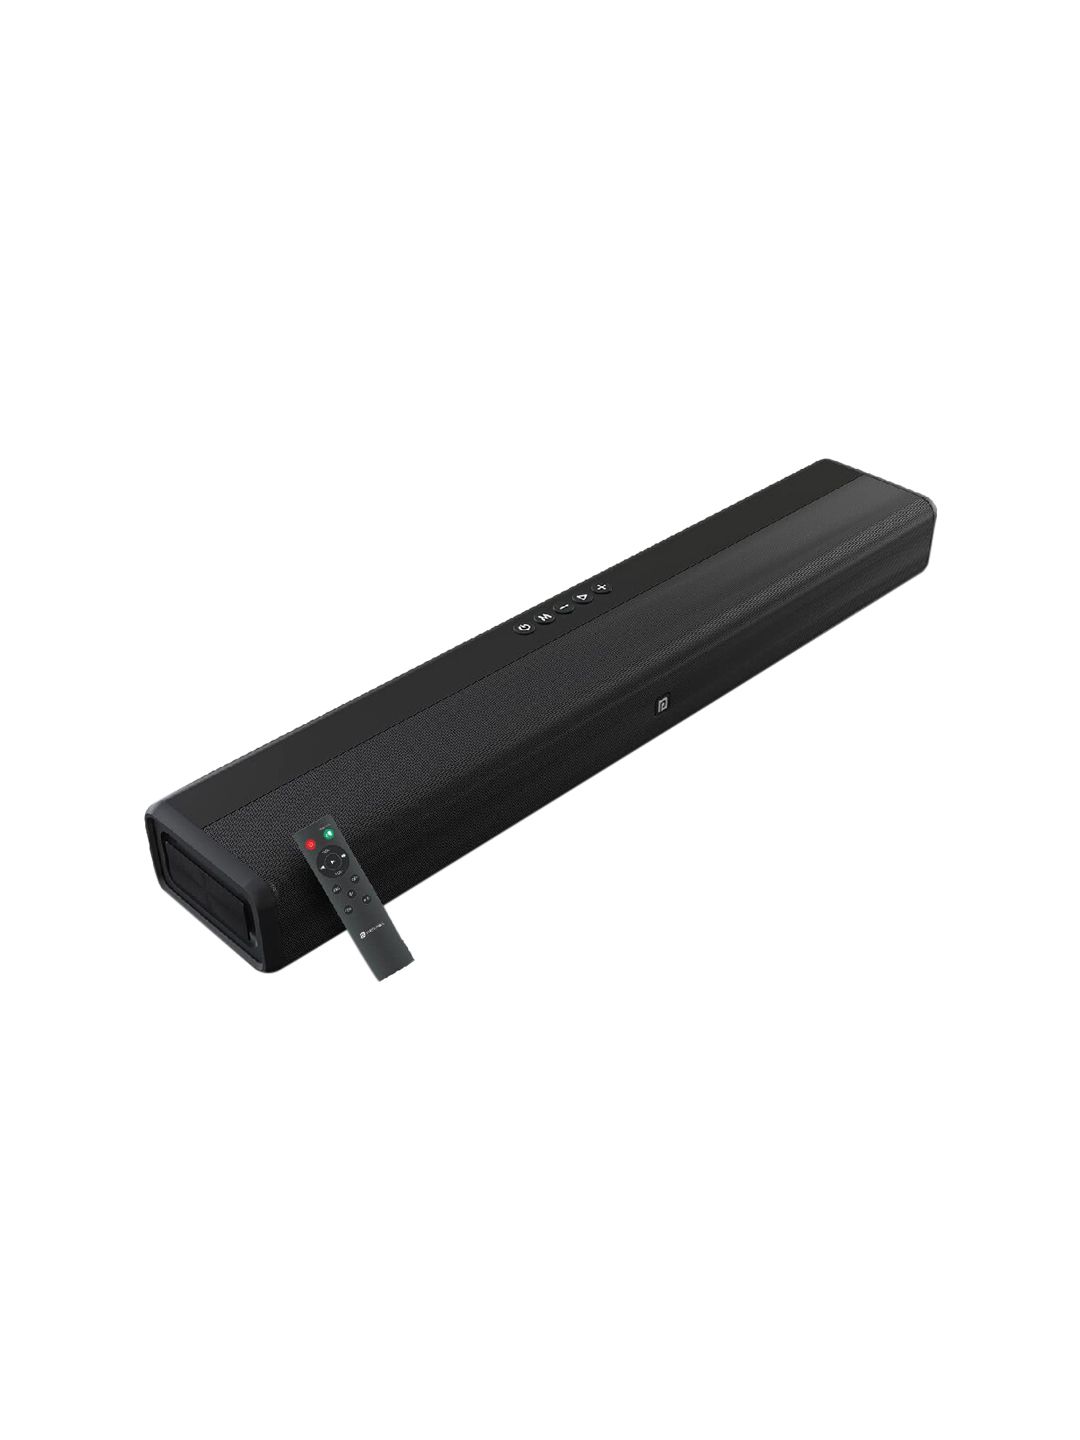 Portronics Black Solid Sound Slick III 80 Watt Wireless Bluetooth Soundbar Speakers Price in India